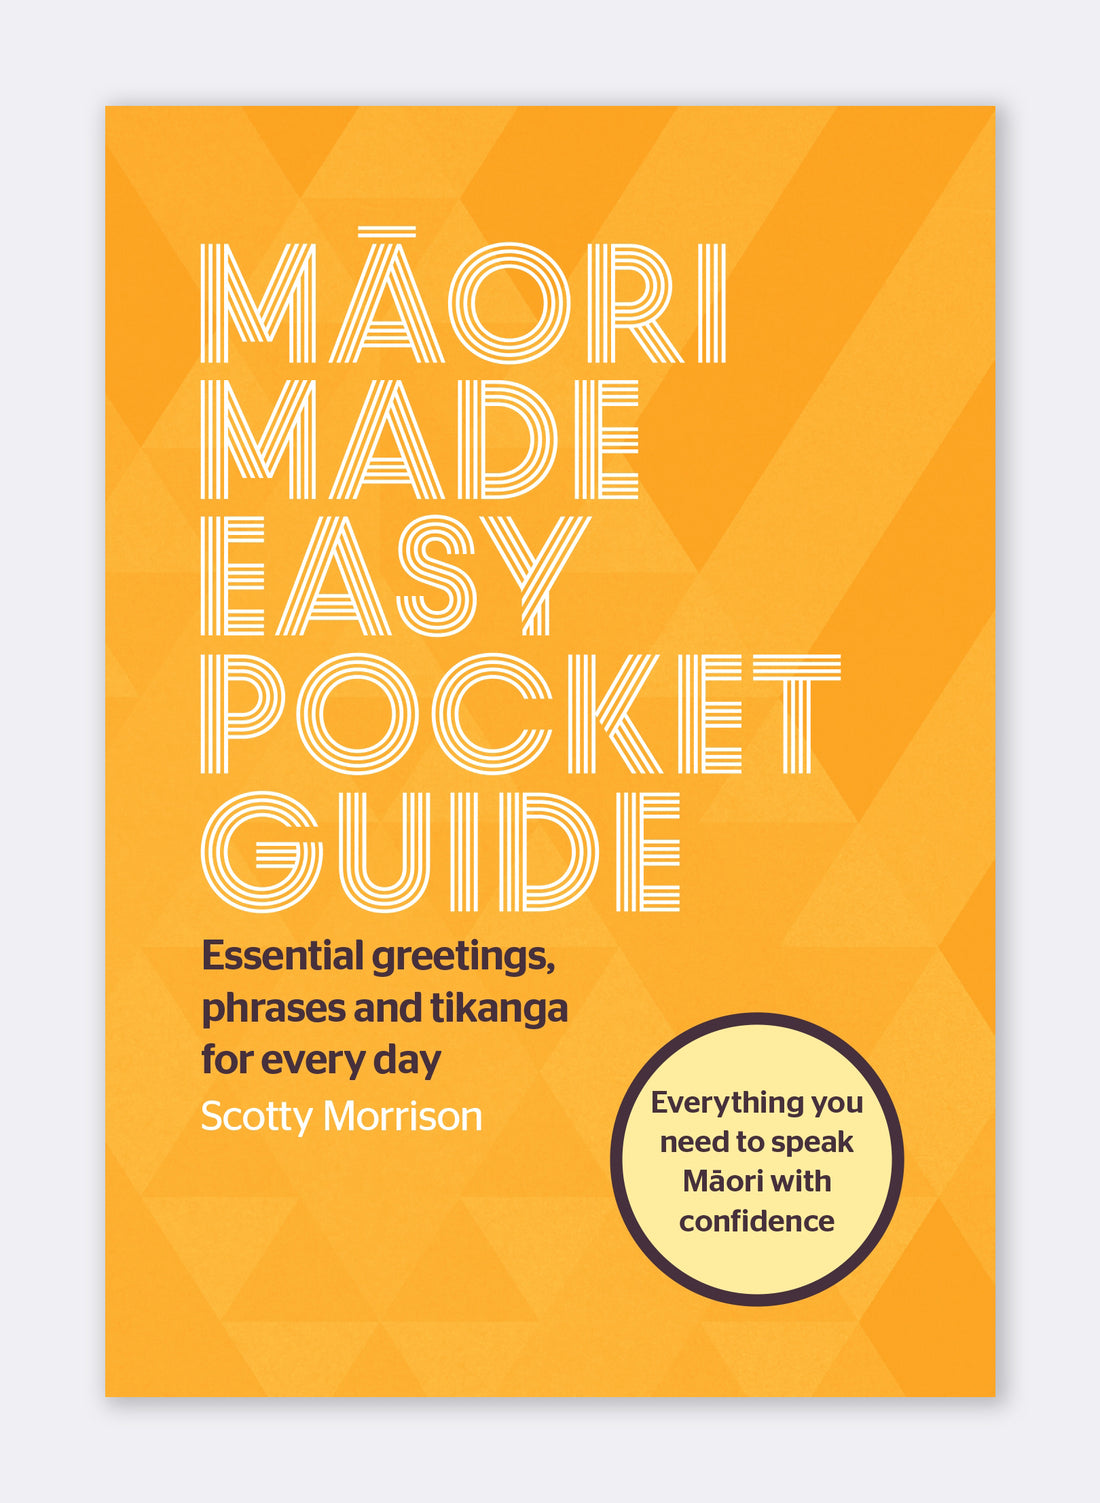 Maori Made Easy - Pocket Guide